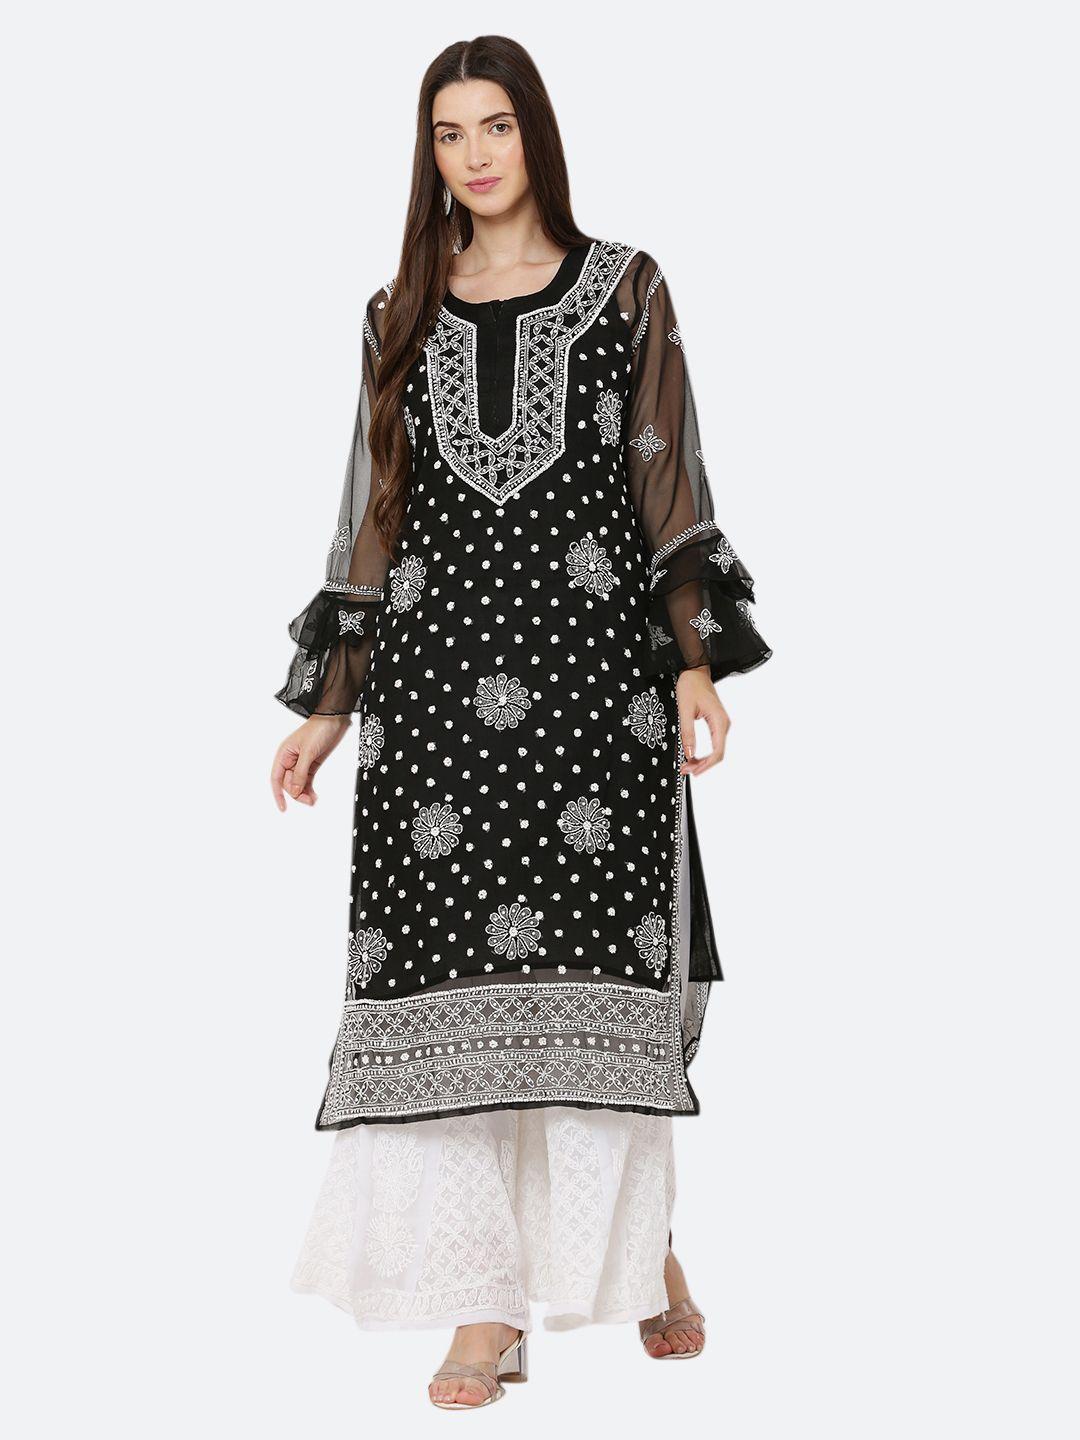 fawoment women black ethnic motifs embroidered bell sleeves handloom georgette kurta